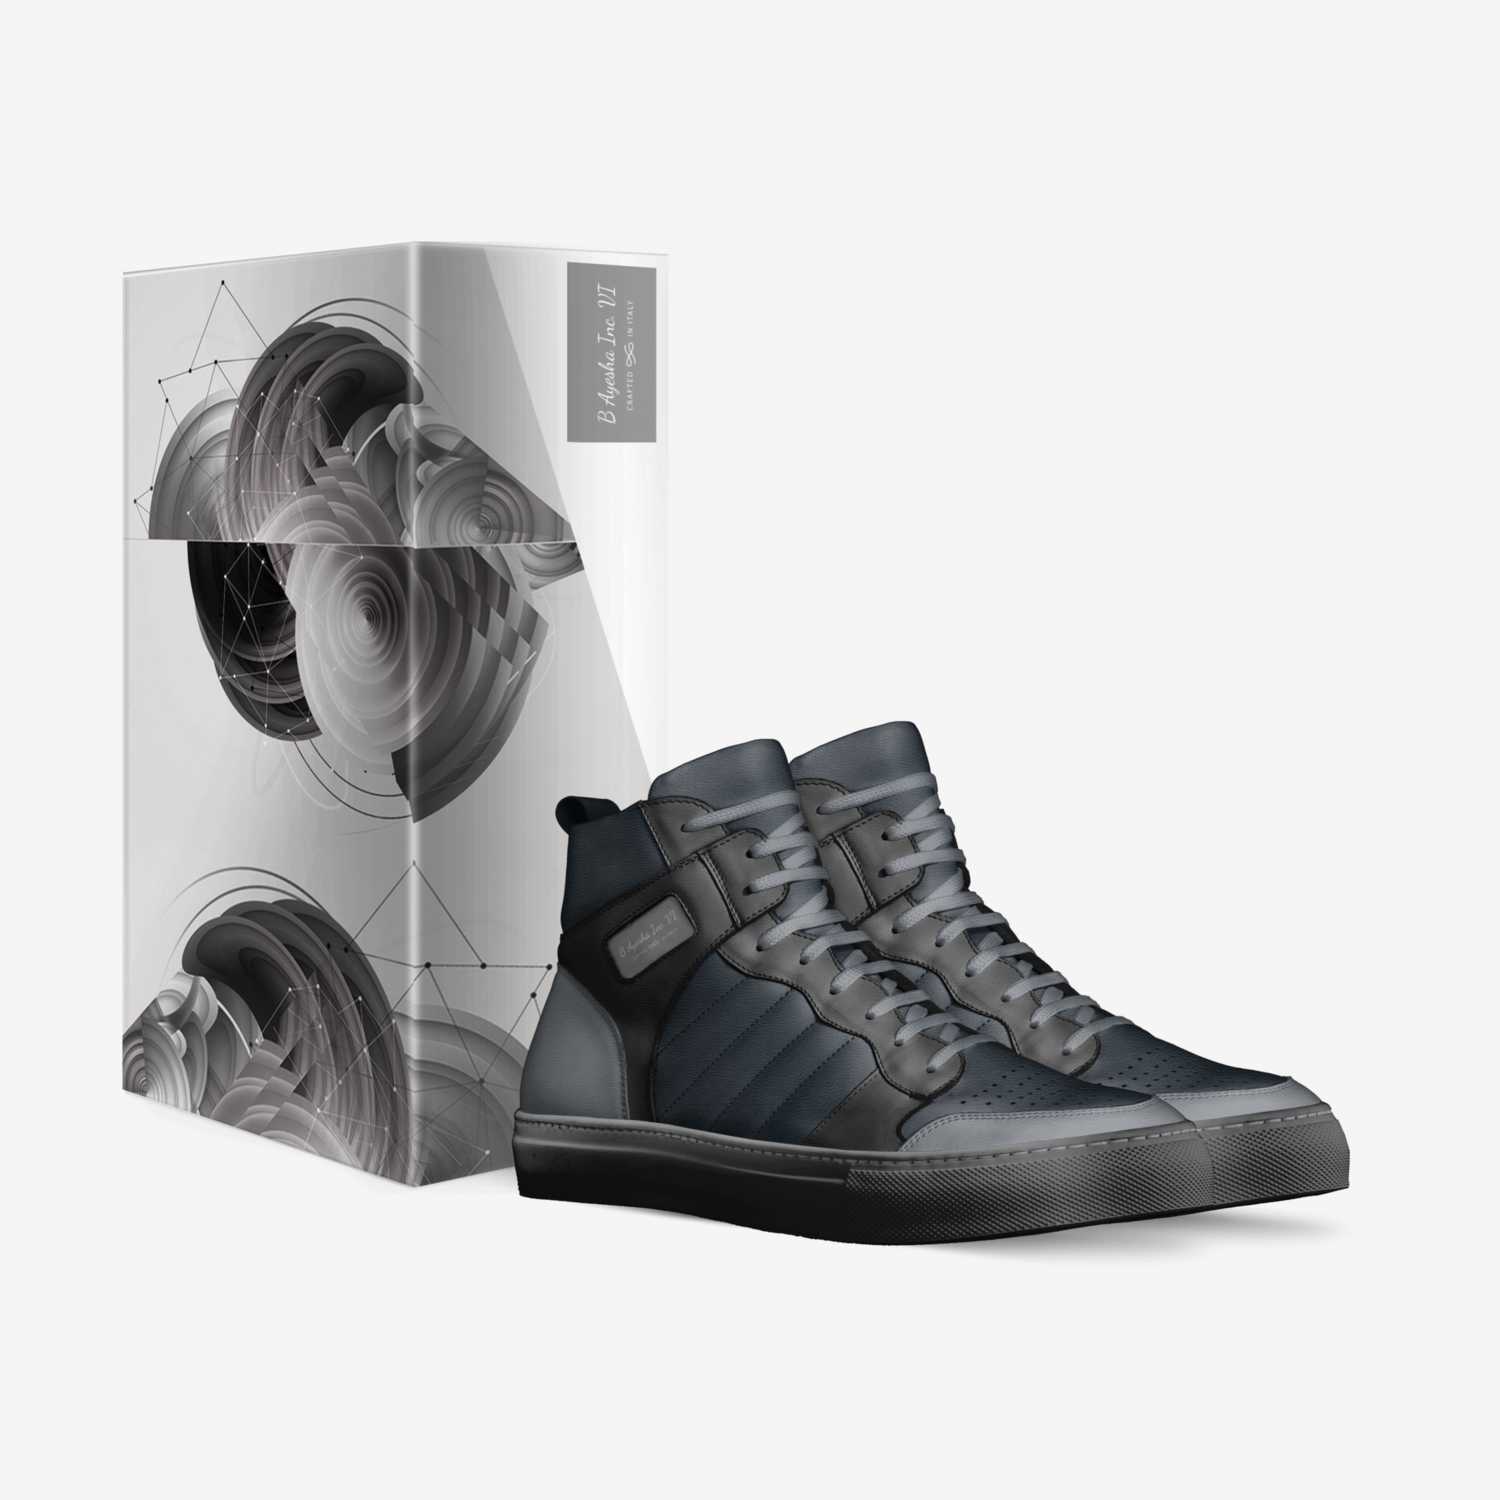 B Ayesha Inc. VI custom made in Italy shoes by Bina Banks | Box view